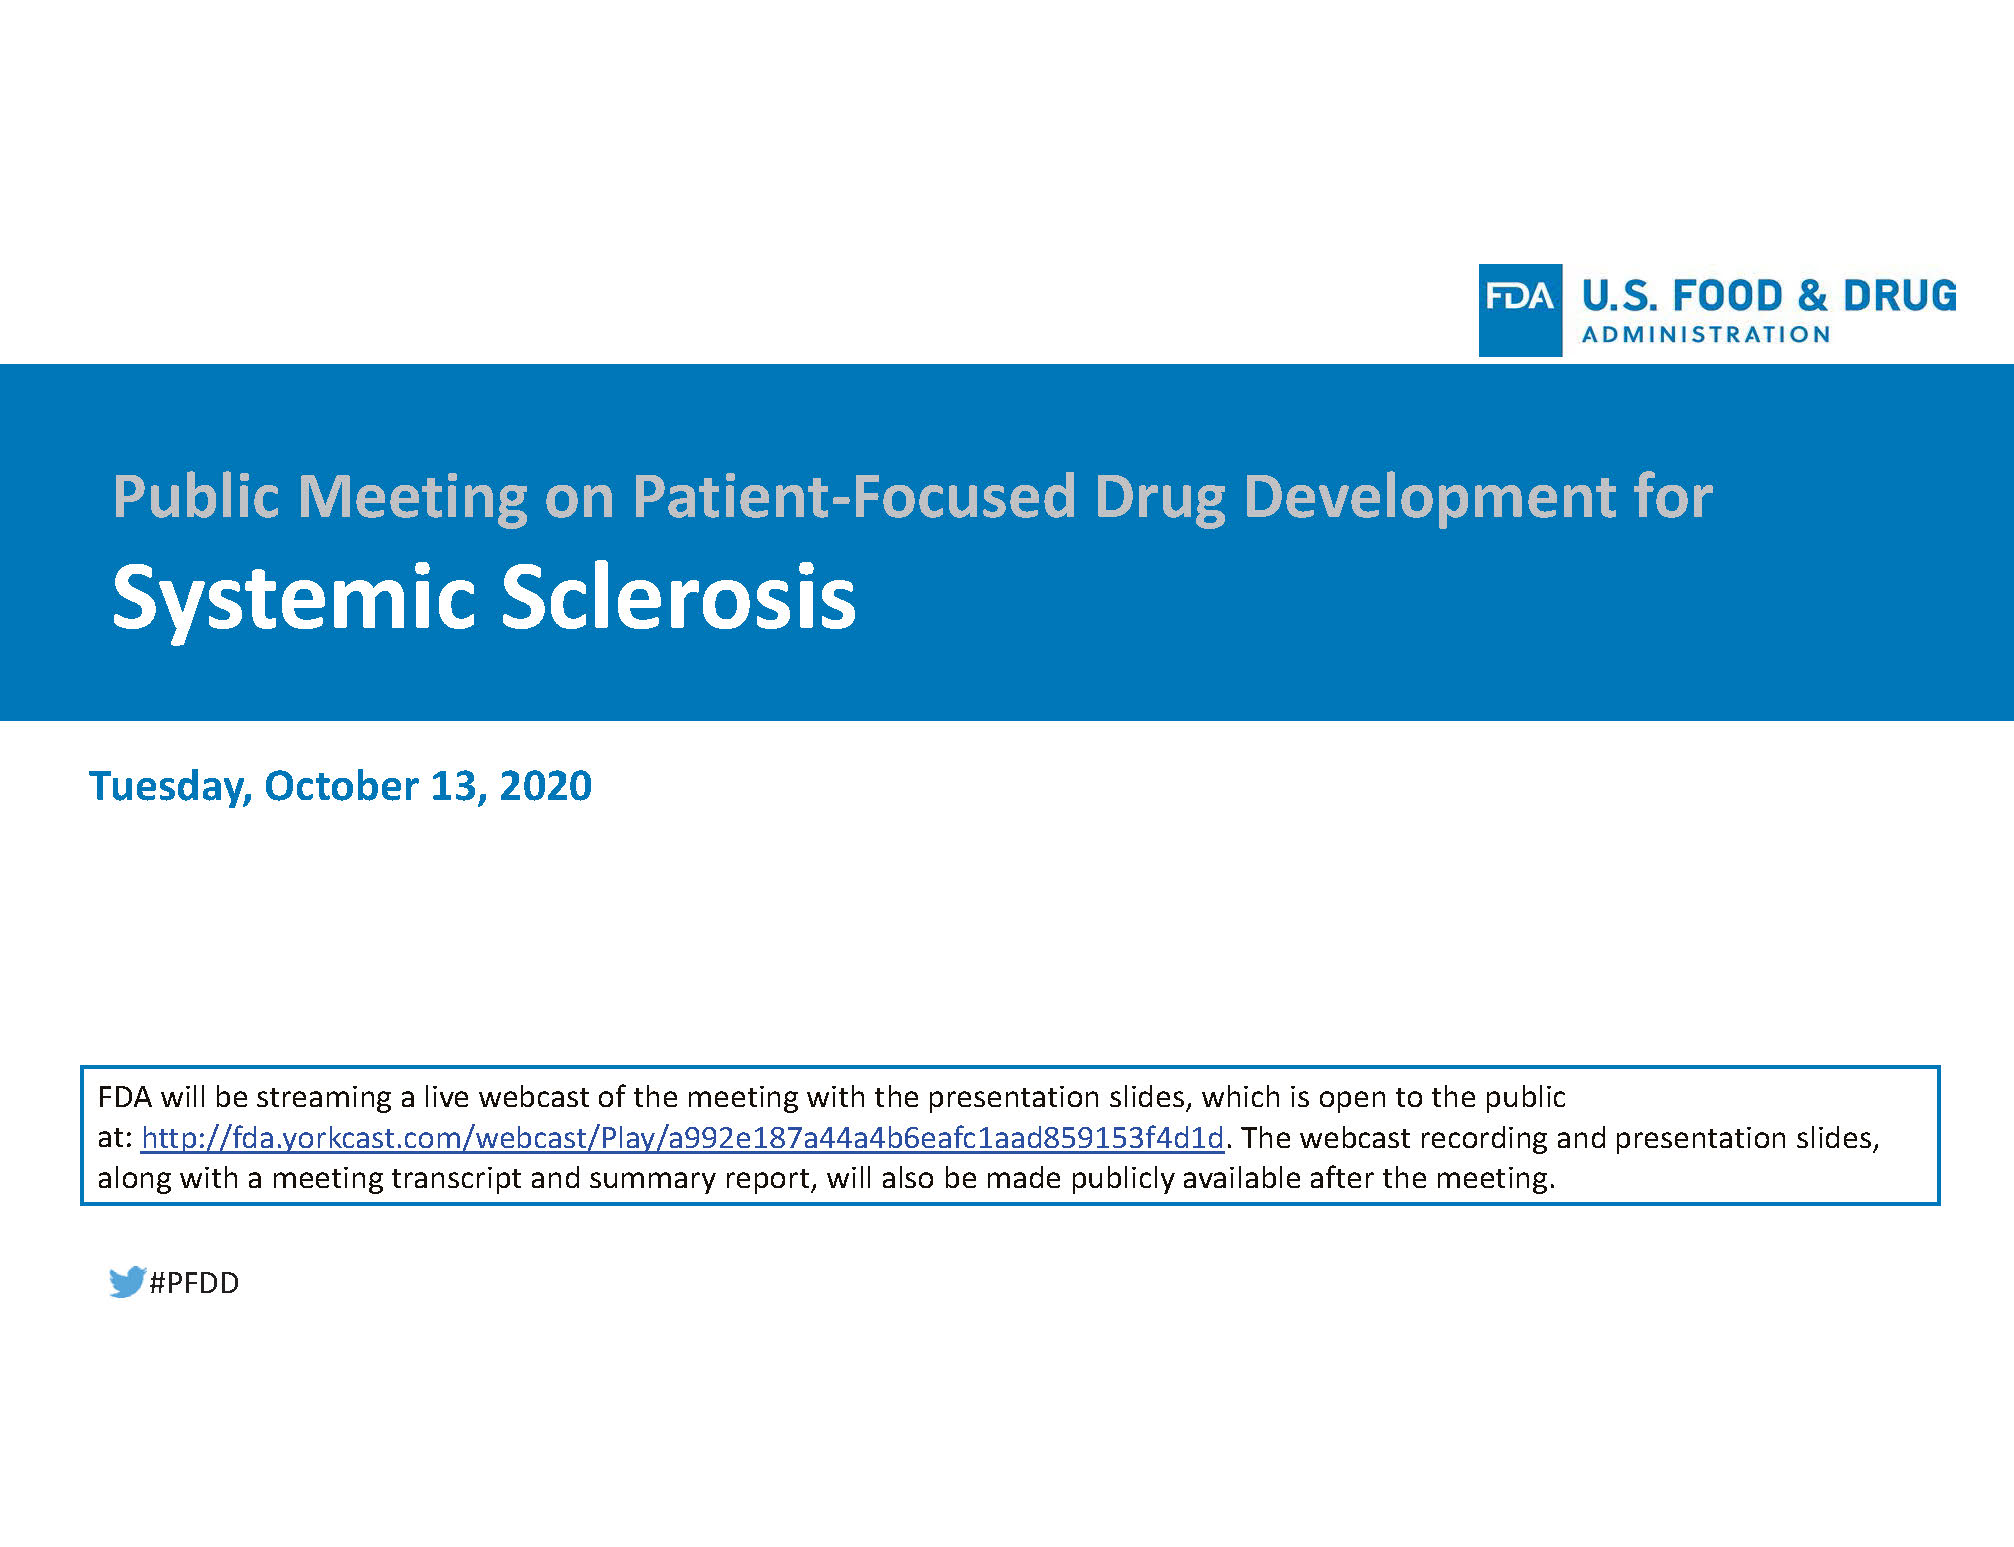 FDA SSc Patient Focused Drug Development October 2020 Cover